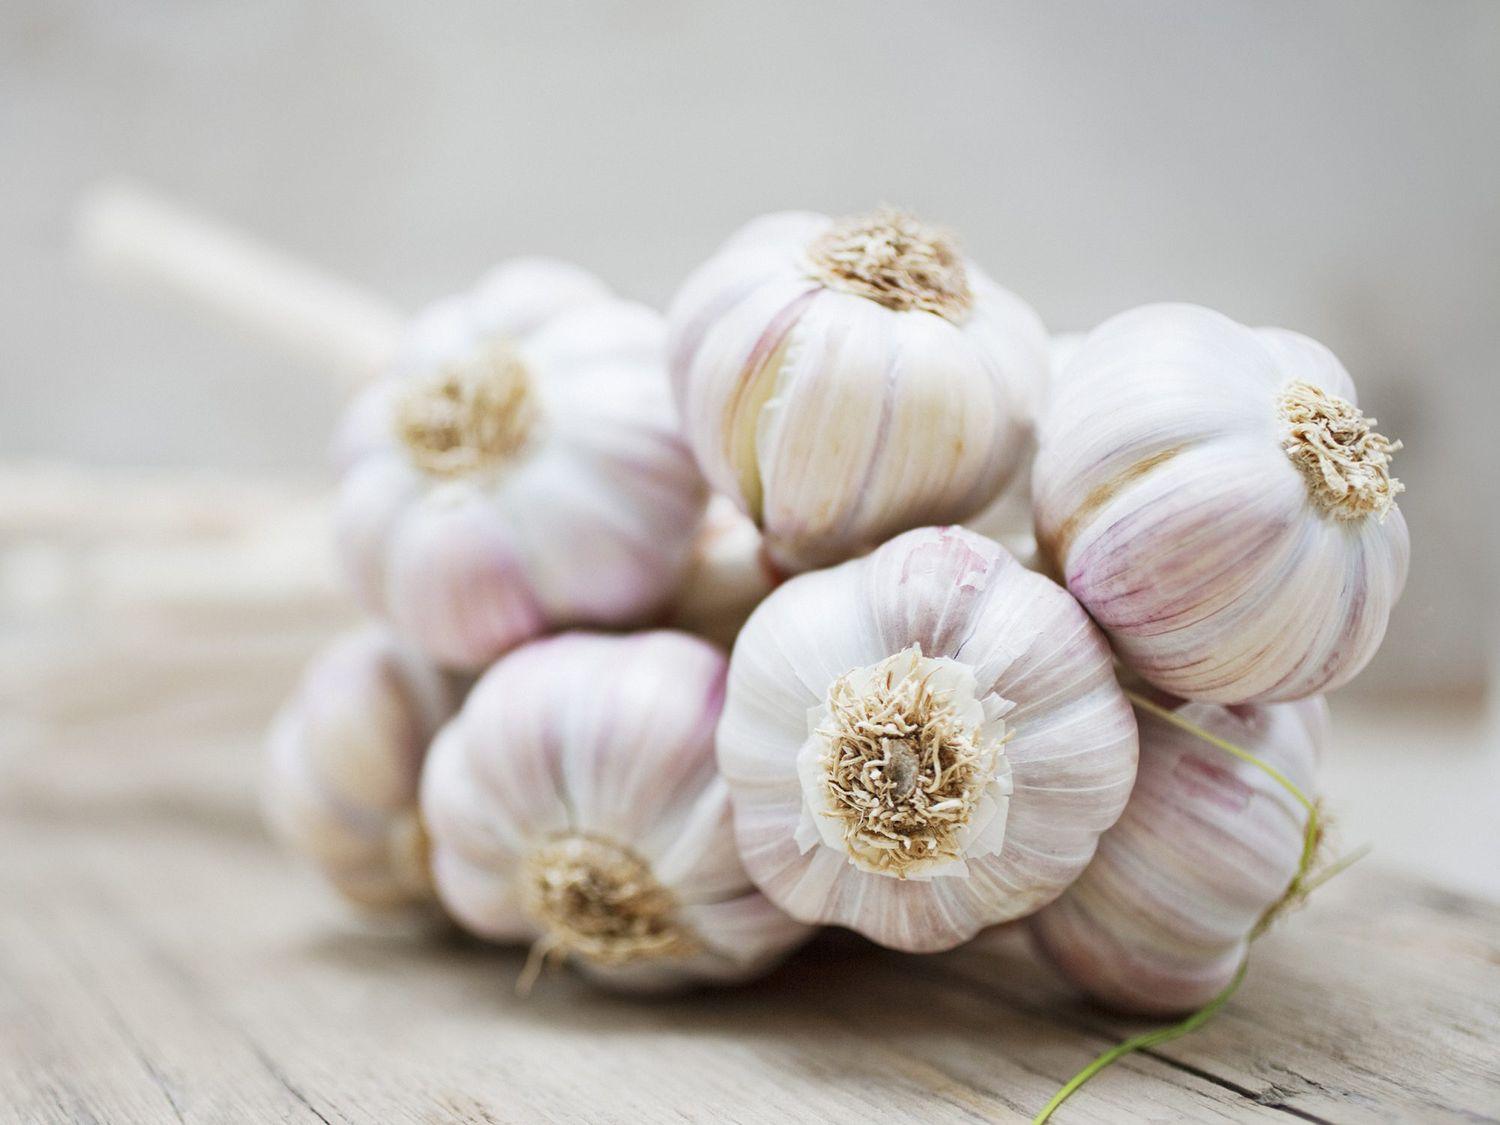 6 Powerful Health Benefits of Garlic